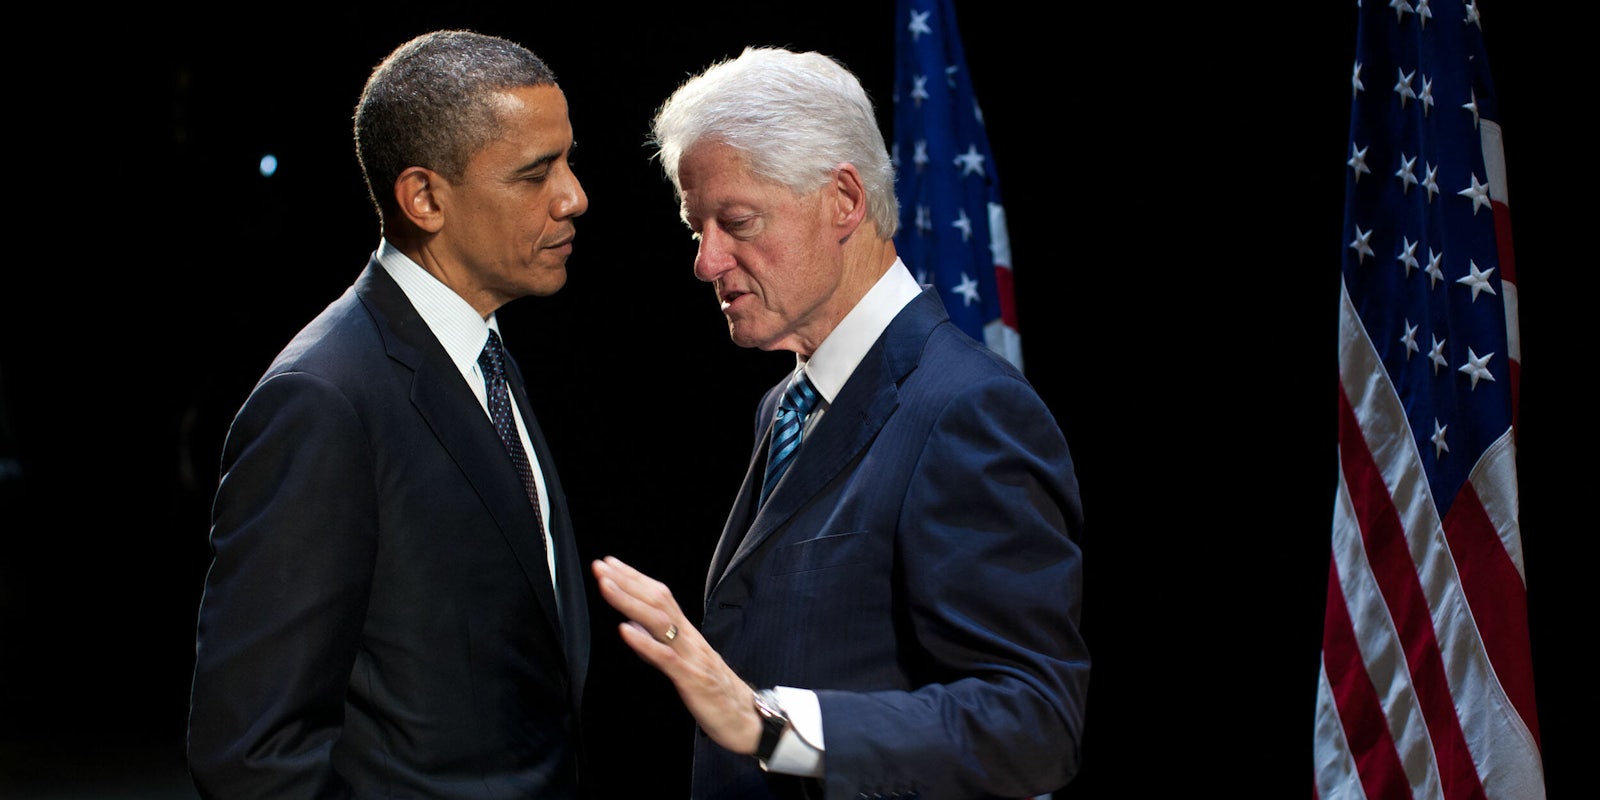 Former Presidents Barack Obama and Bill Clinton